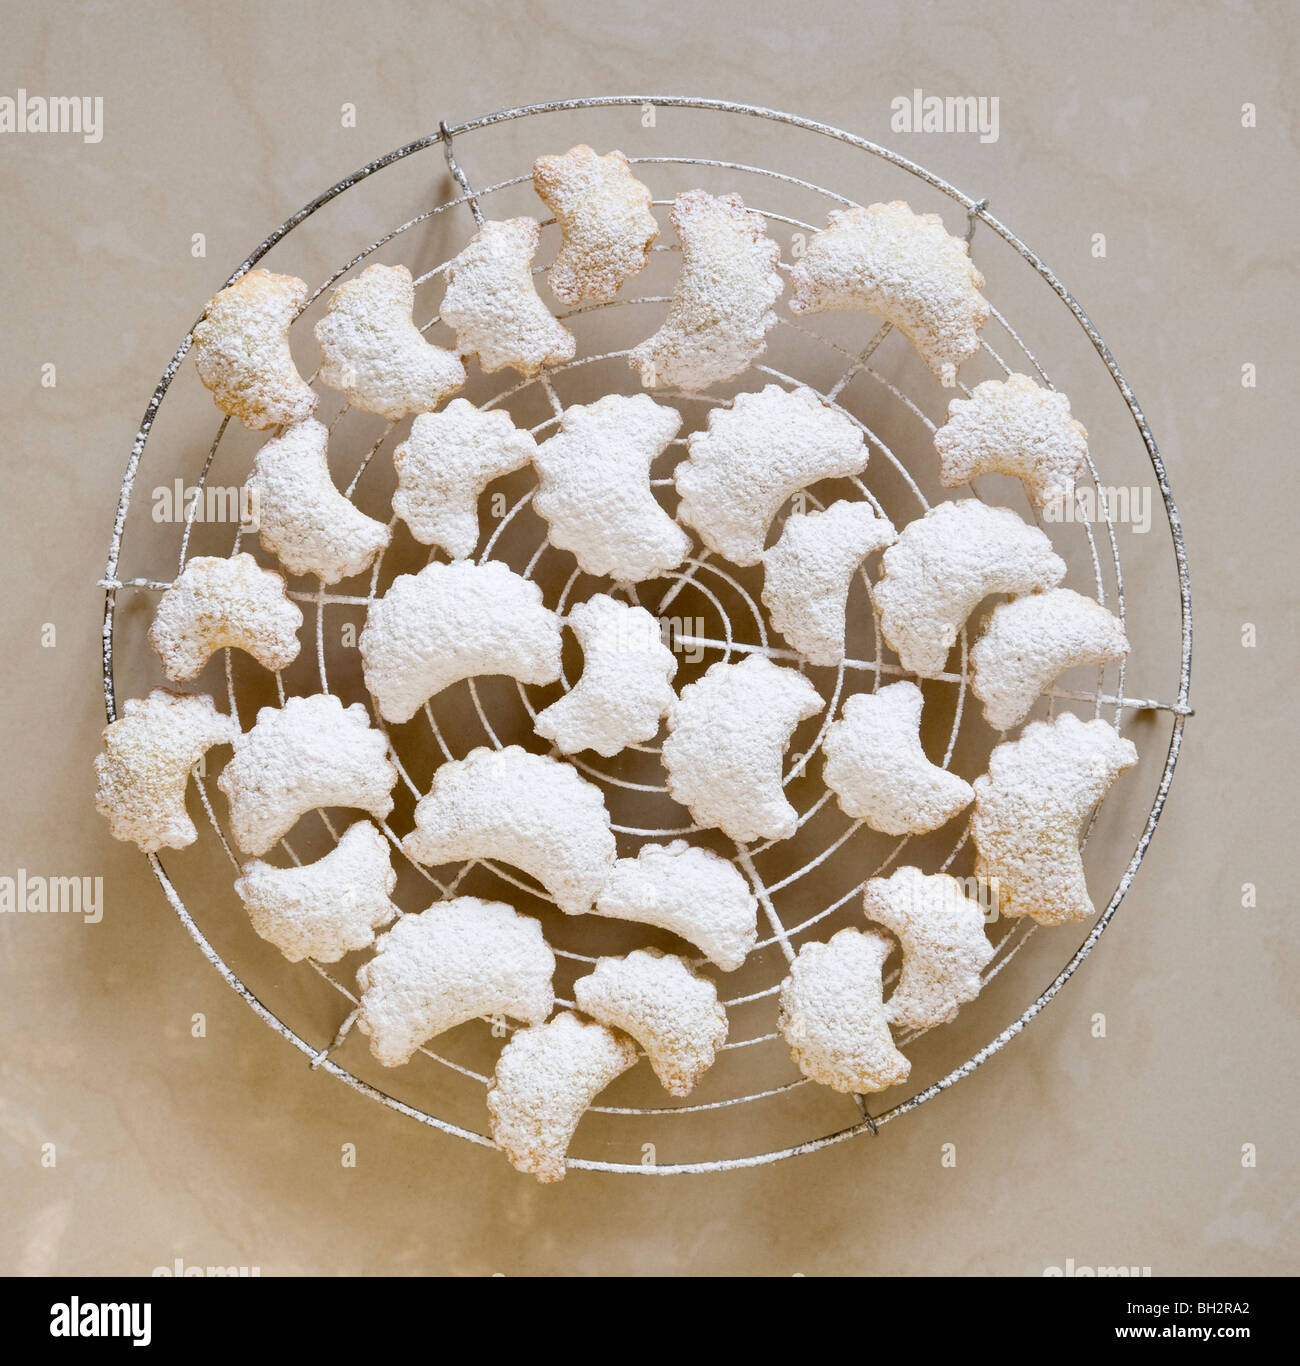 Con forma de media luna, White Christmas cookies Foto de stock